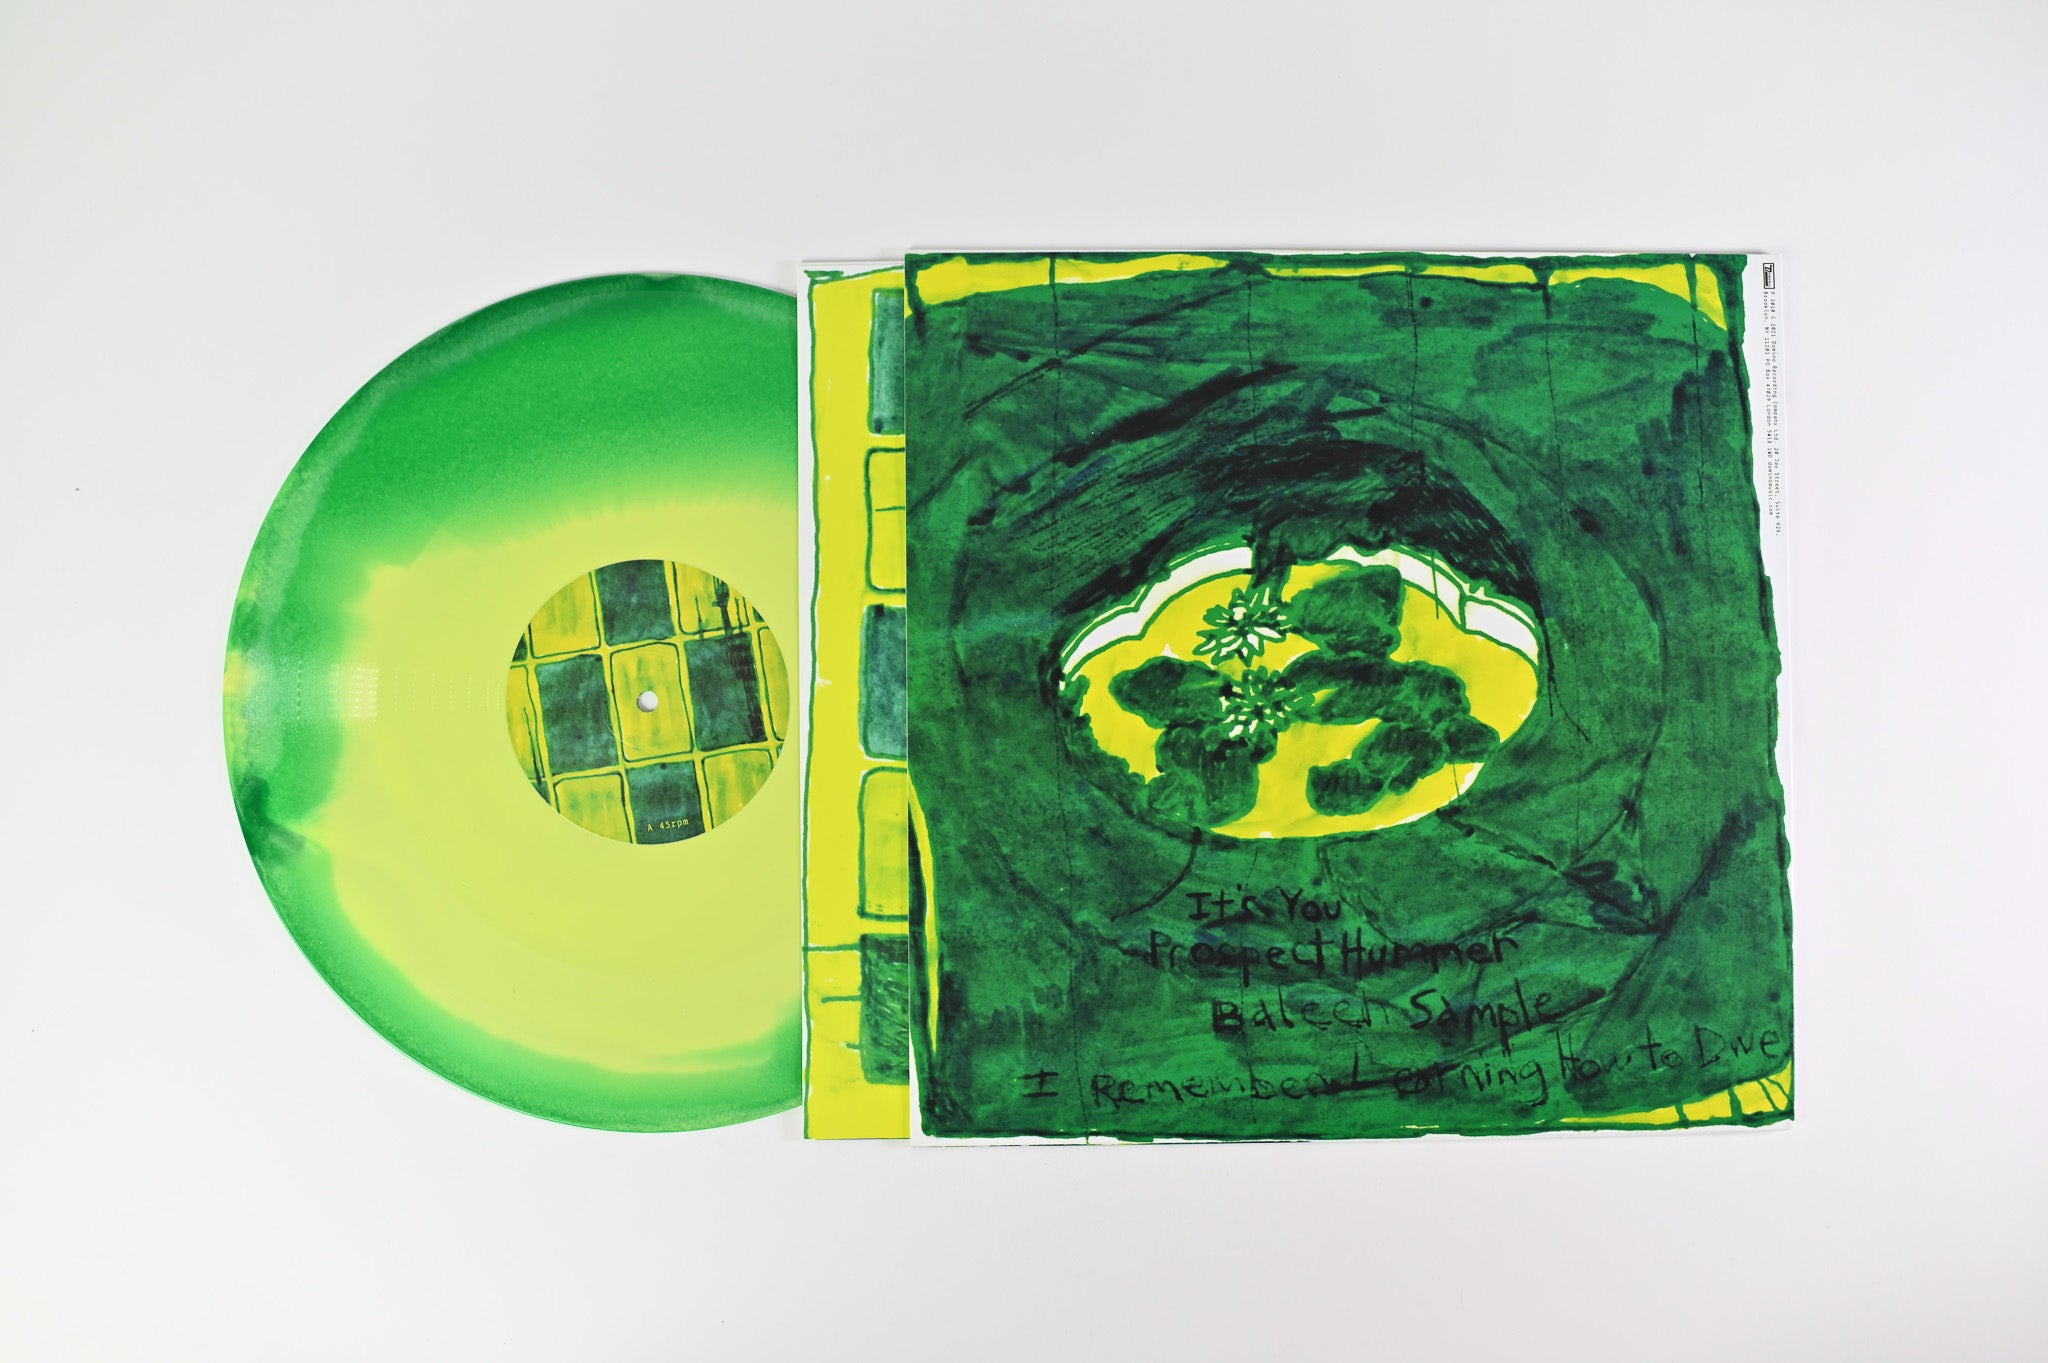 Animal Collective - Prospect Hummer on Domino Ltd RSD Green/Yellow Swirl Reissue